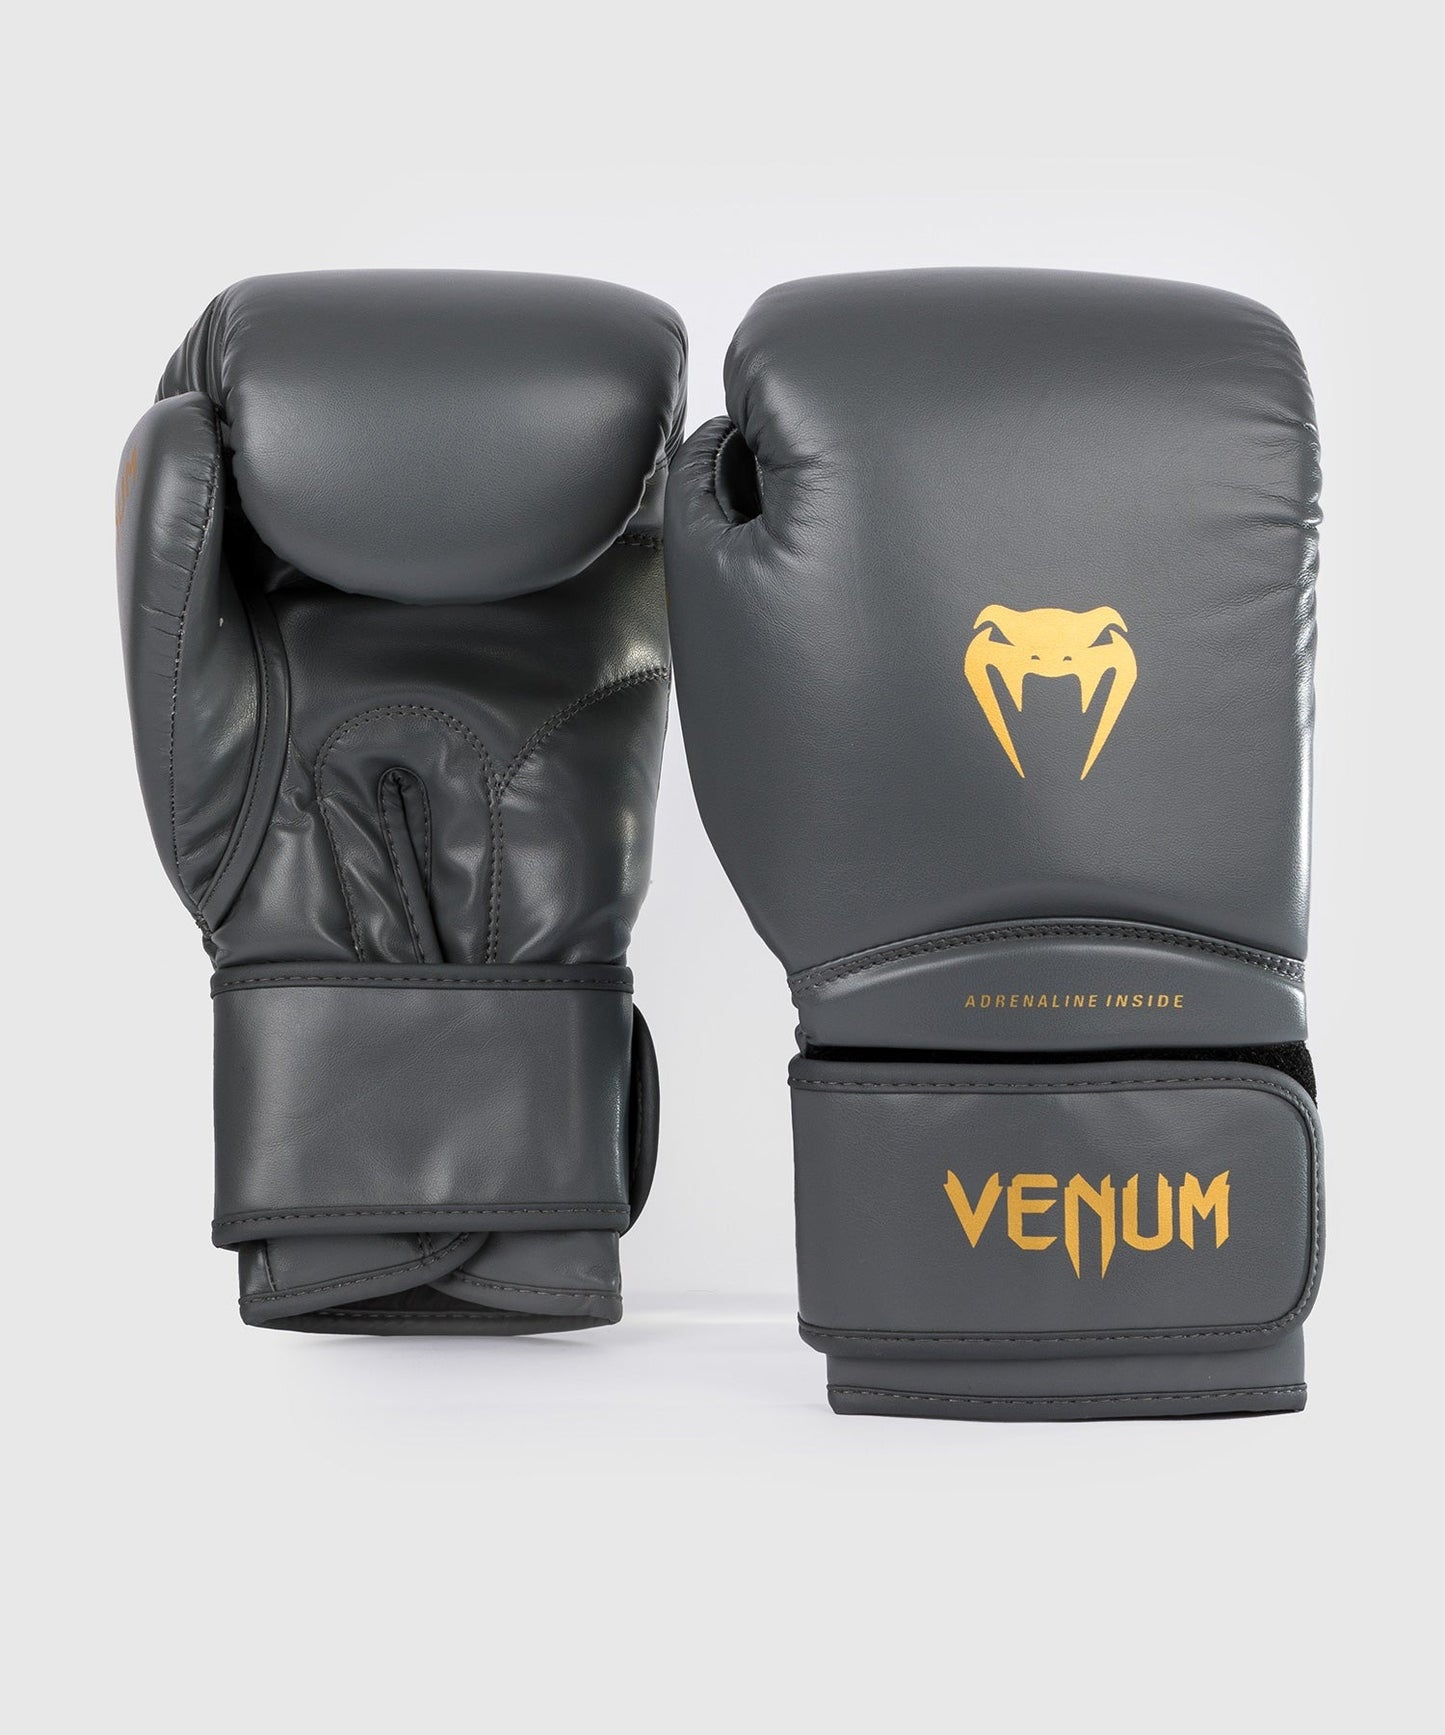 Venum Contender 1.5 Guantes de boxeo - Gris/Dorado